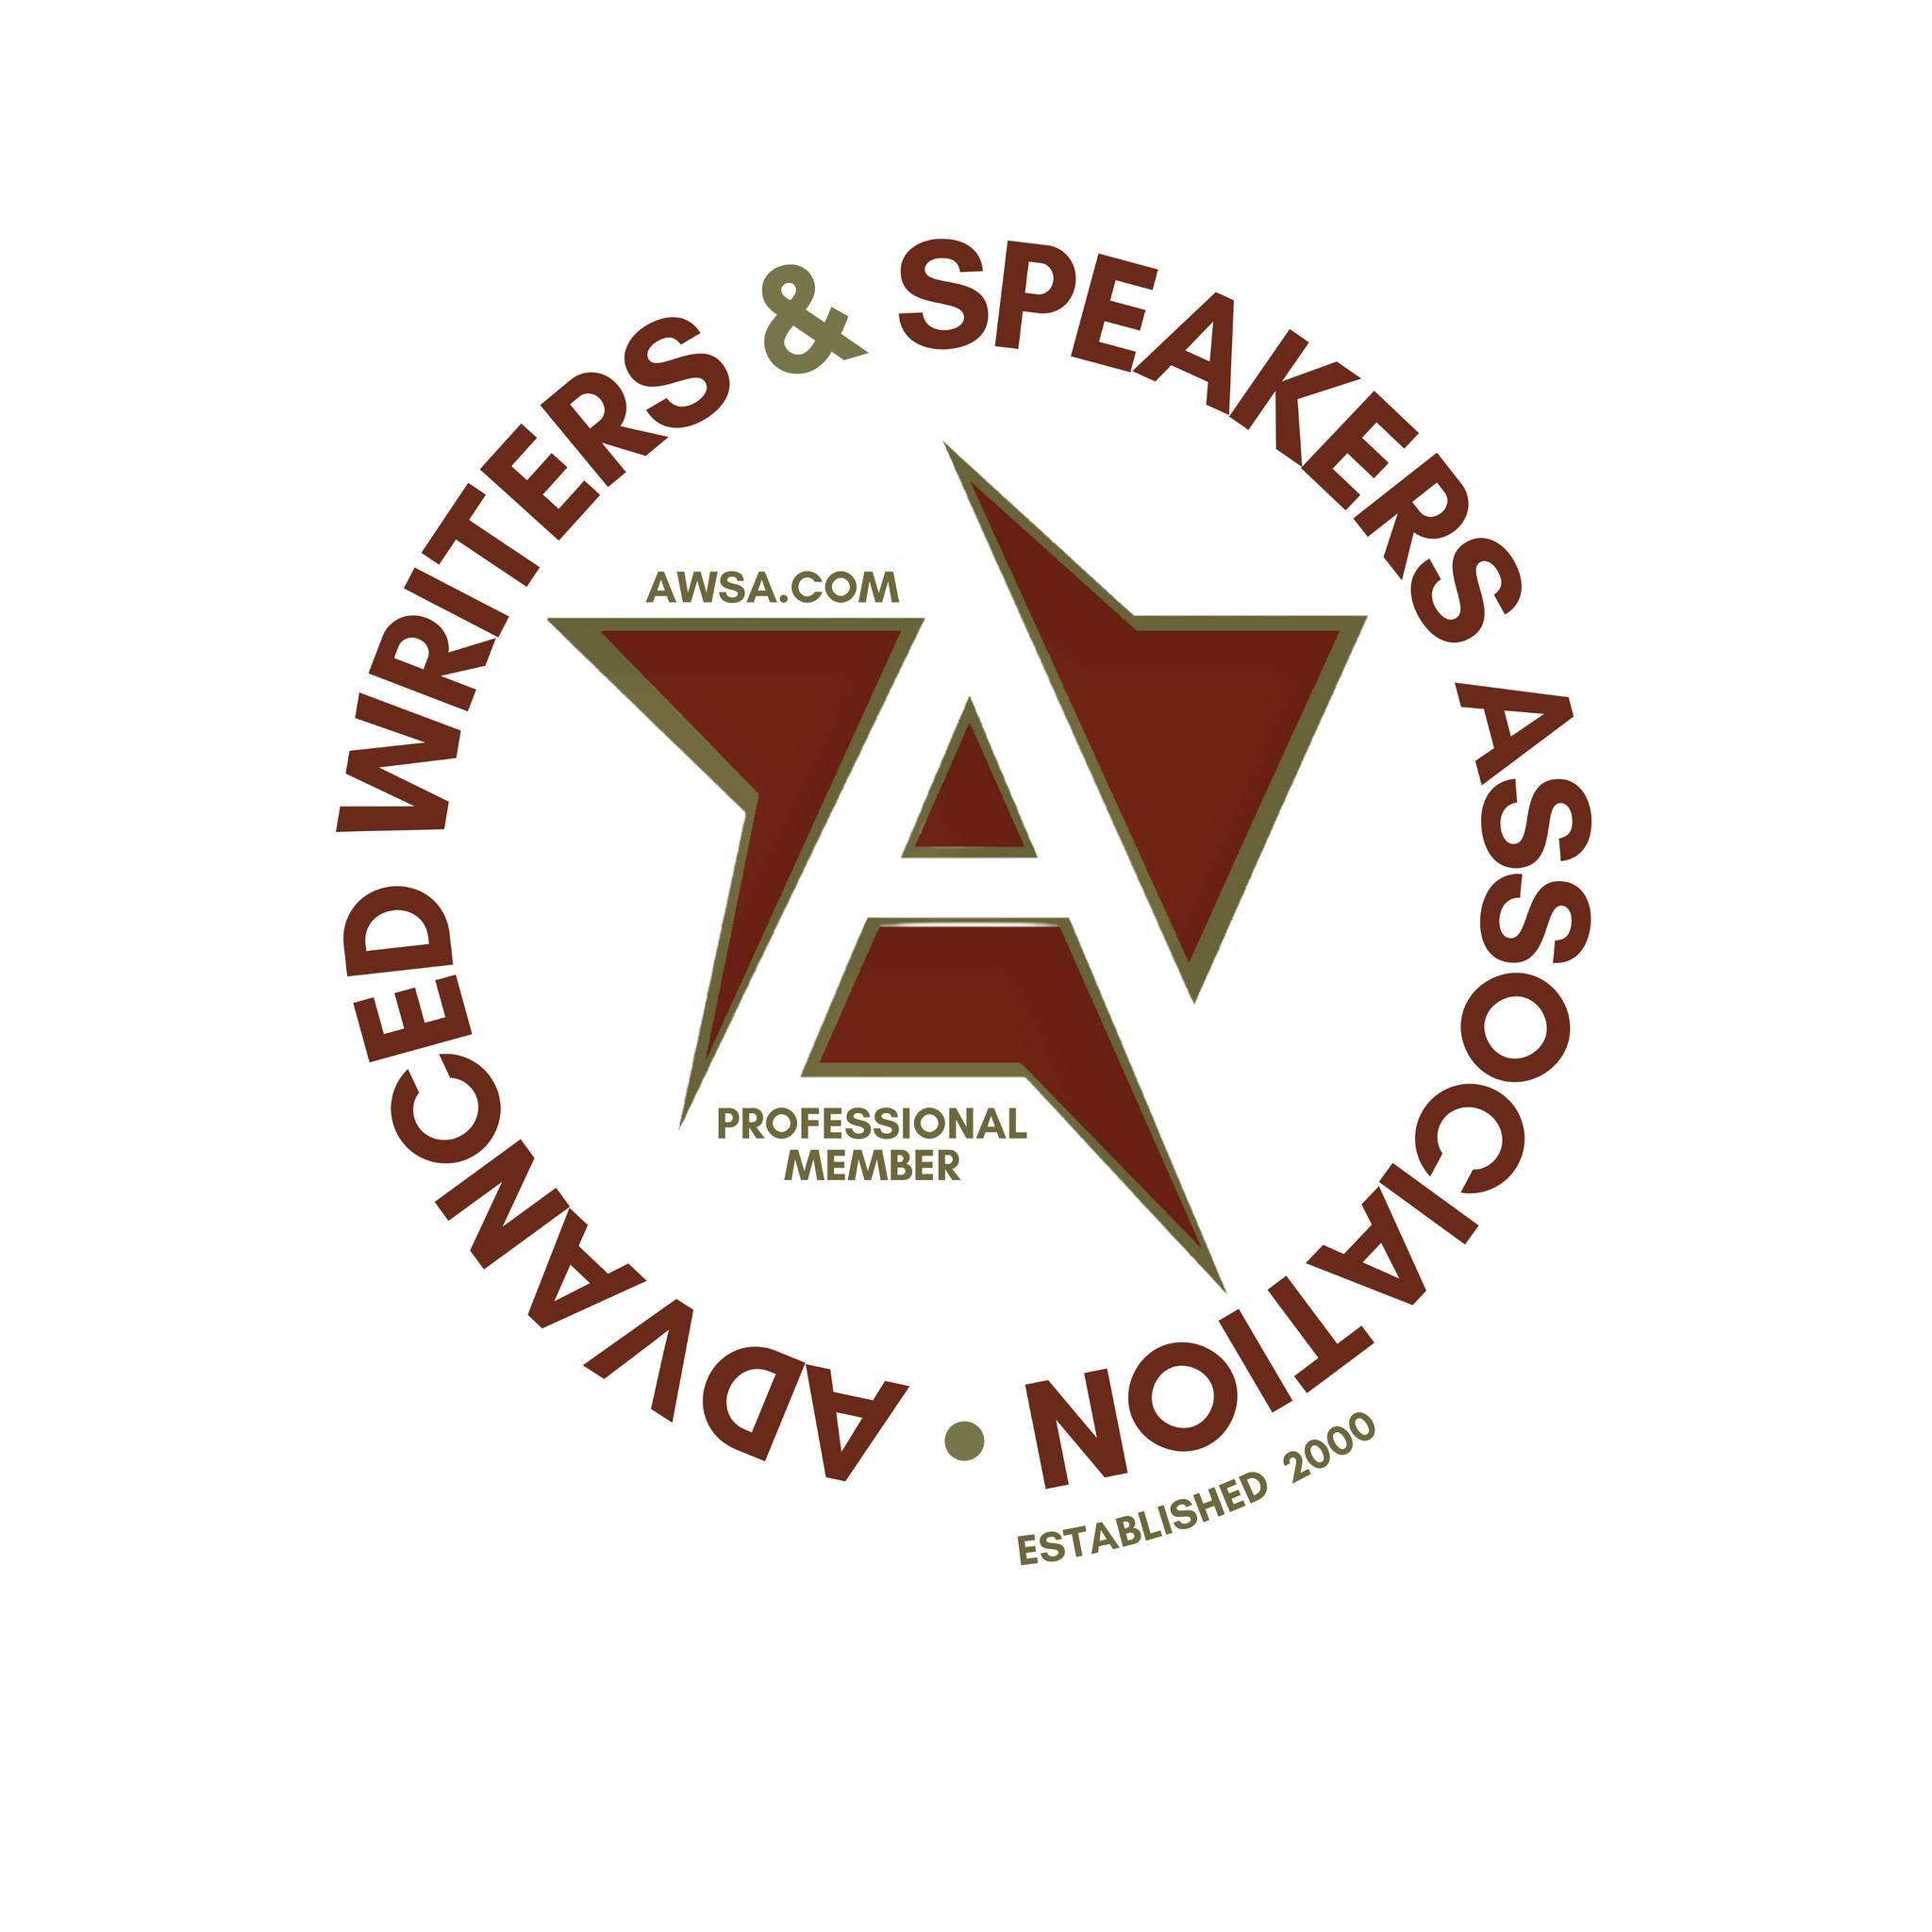 Advanced Writers & Speakers Association (AWSA) member